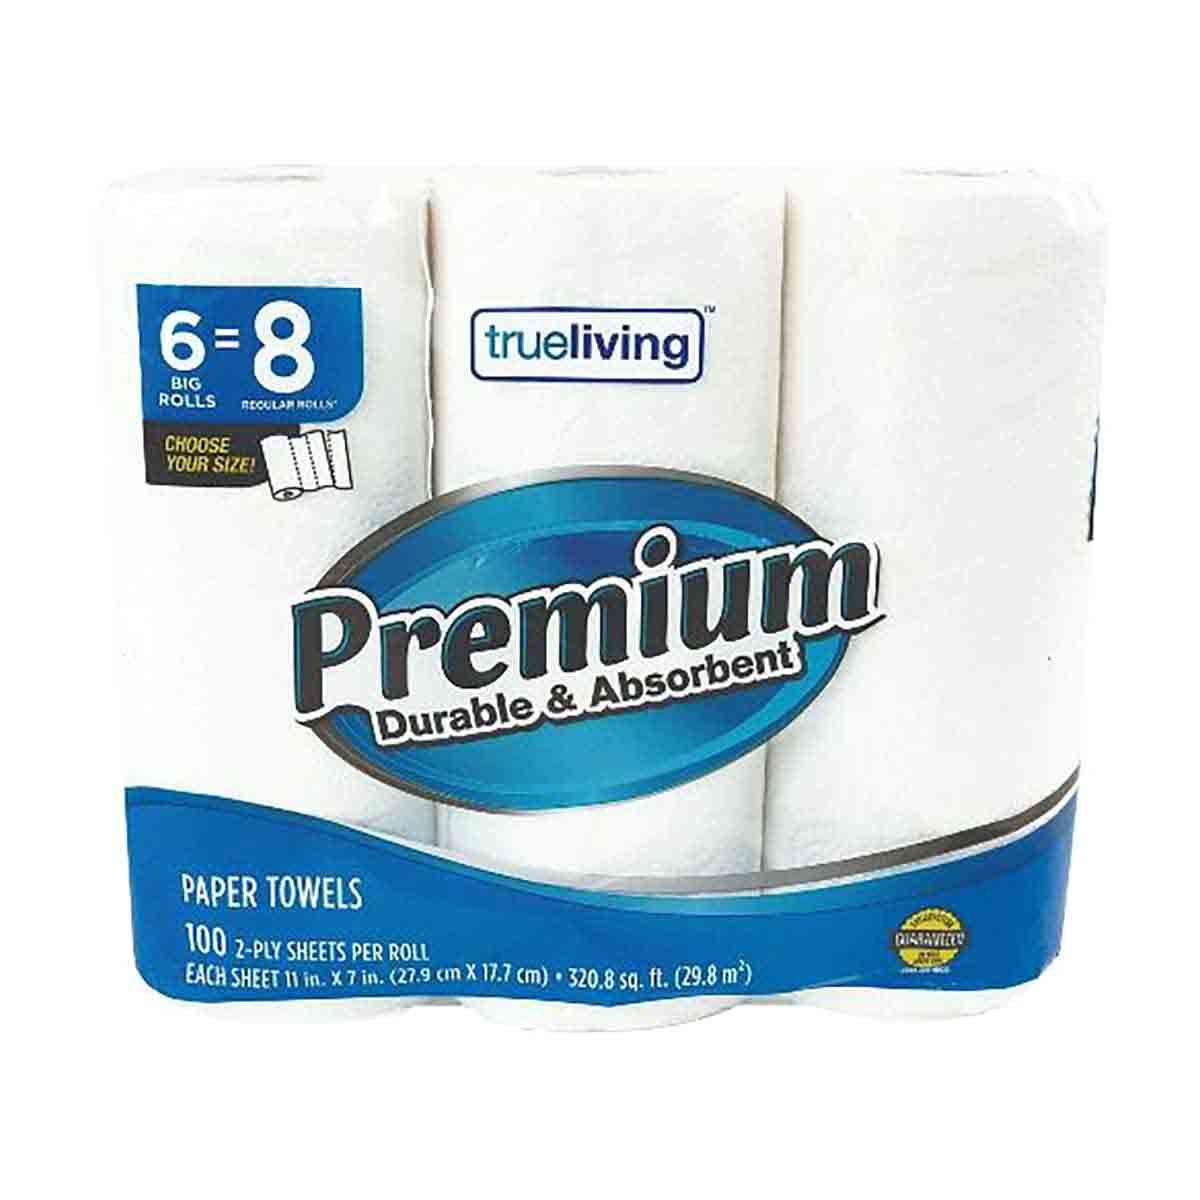 TrueLiving Premium Paper Towel - 6 Big Rolls